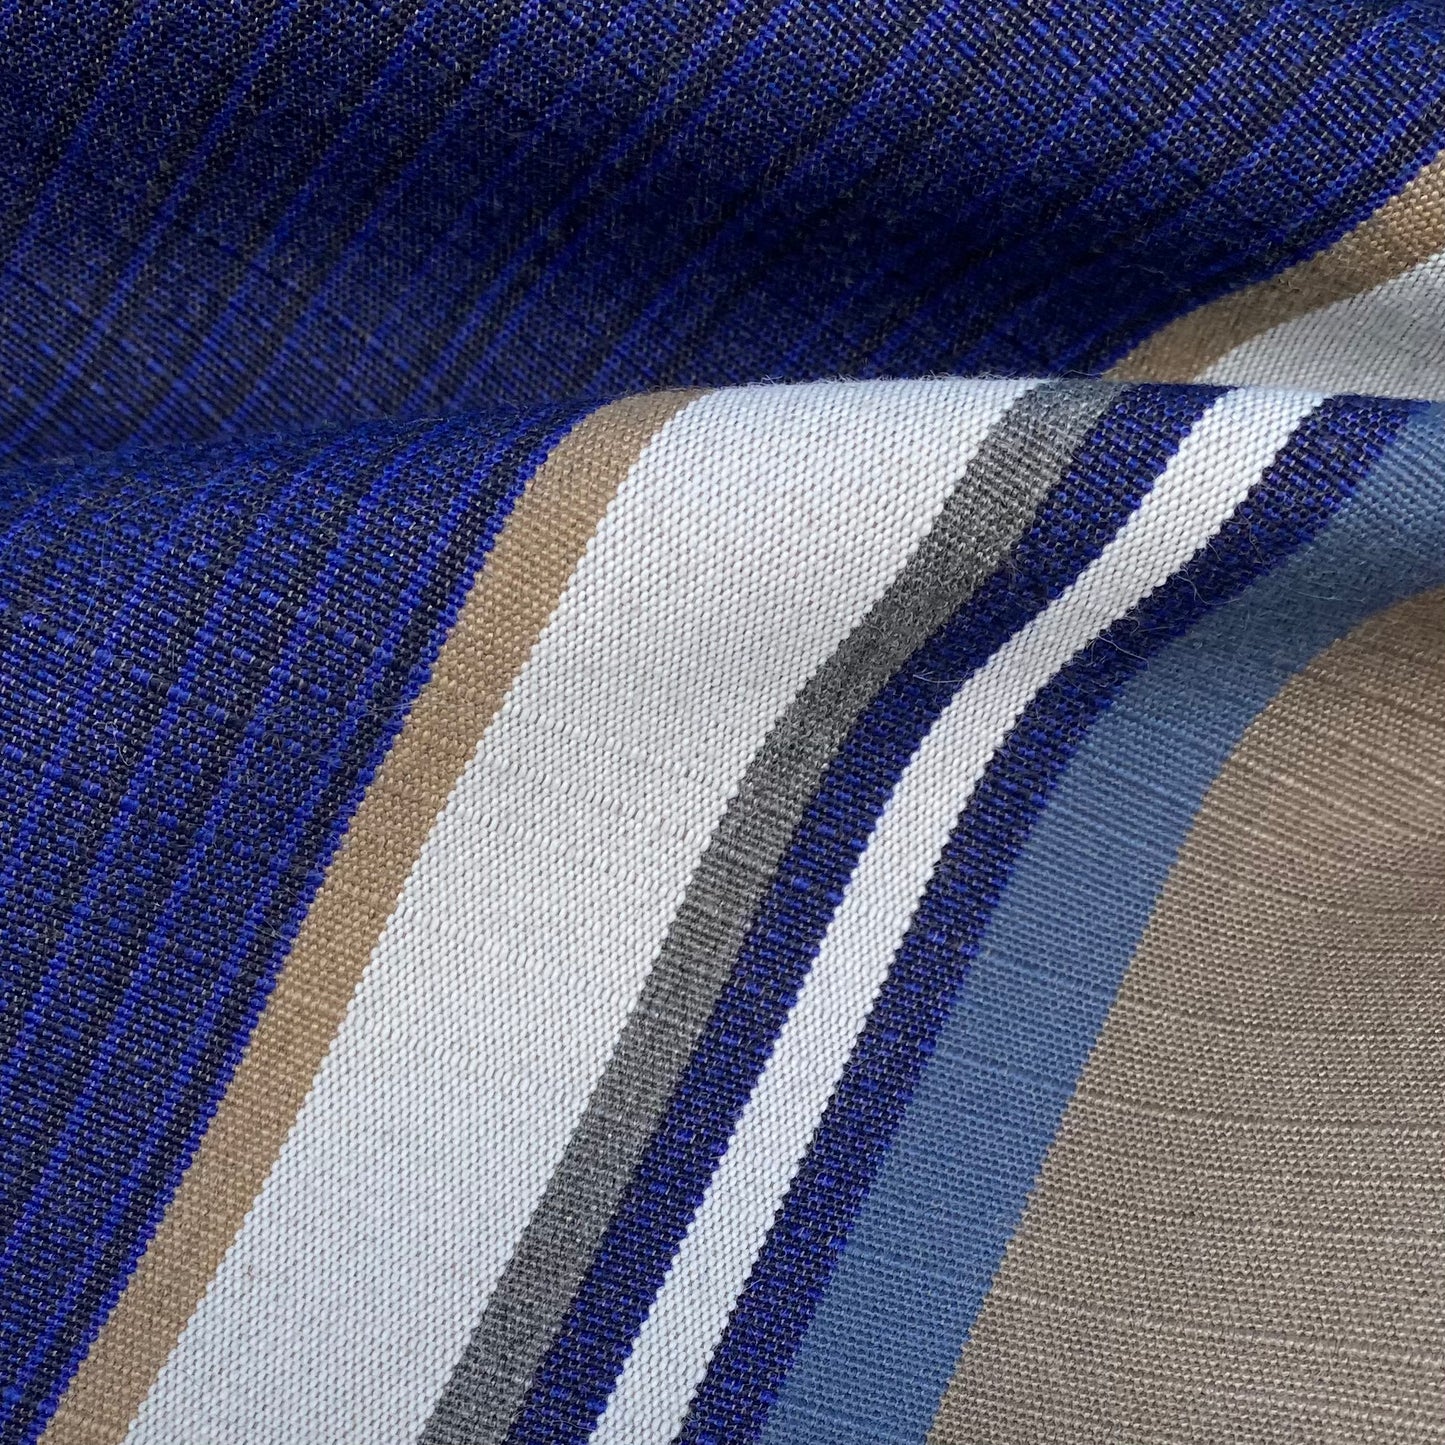 Sunbrella Striped Woven Upholstery - 48” - Blue/White/Beige